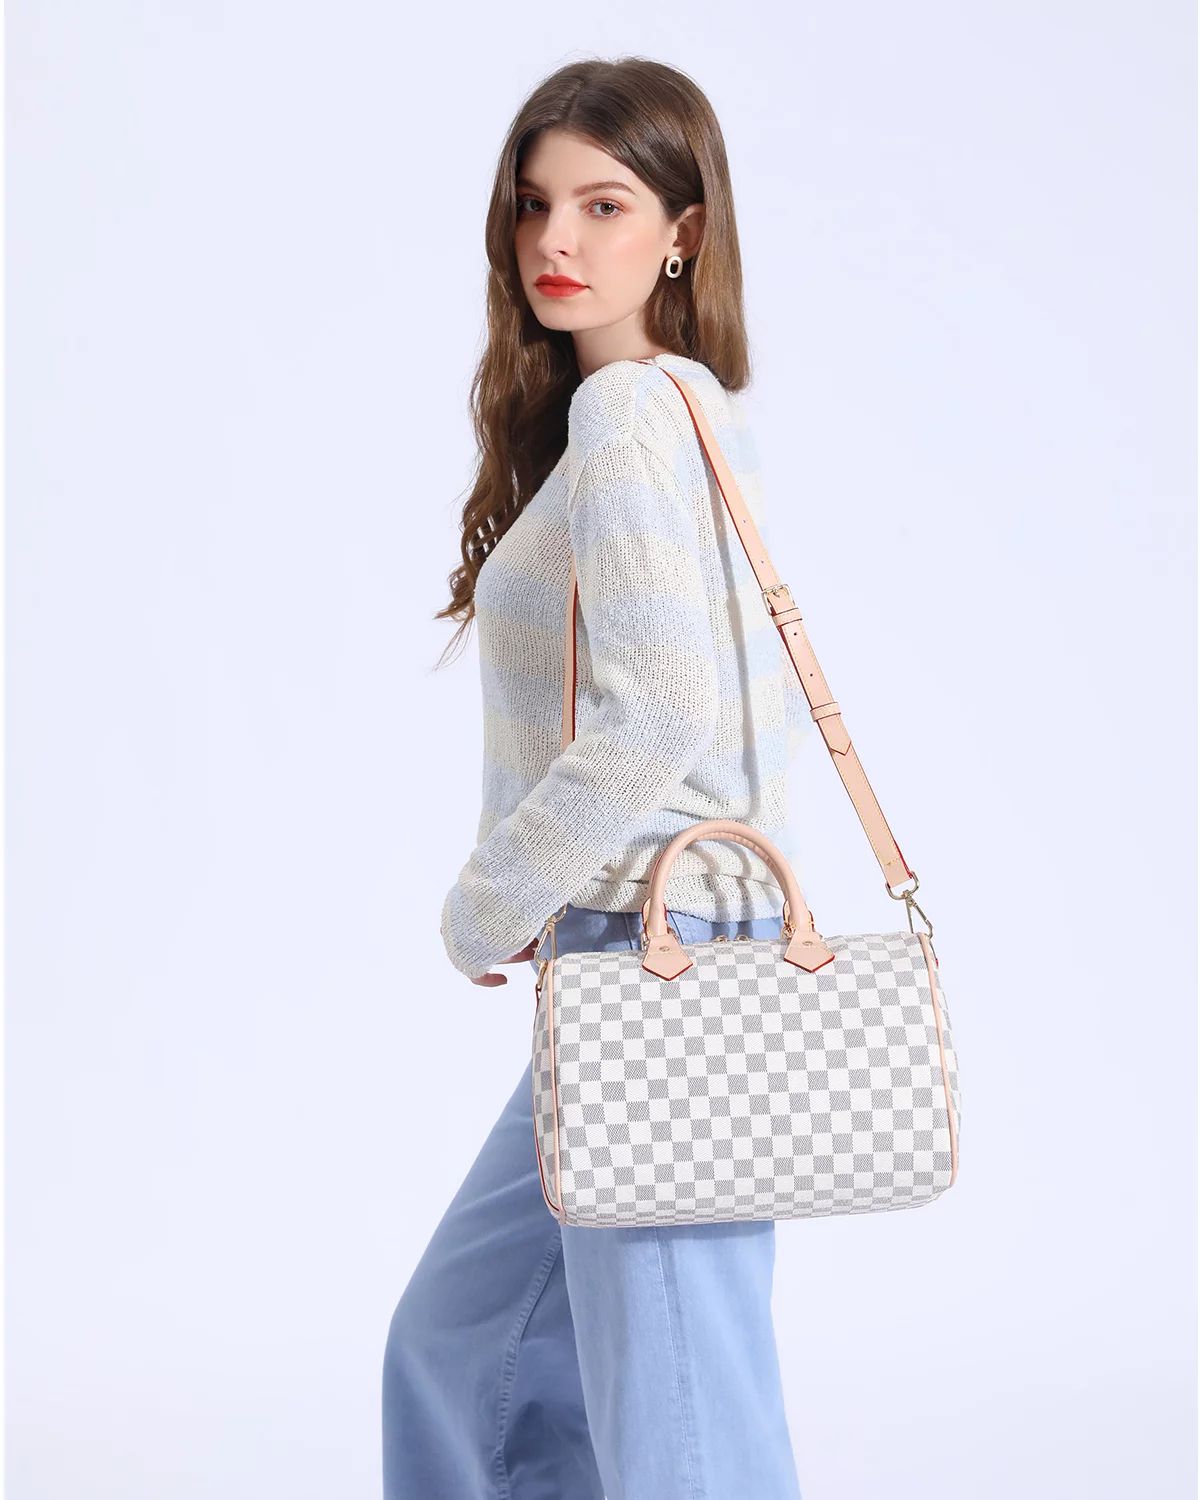 TWENTY FOUR Checkered Tote Bags Shoulder Bag Women Fashion Purses Leather Satchel Handbags With A... | Walmart (US)